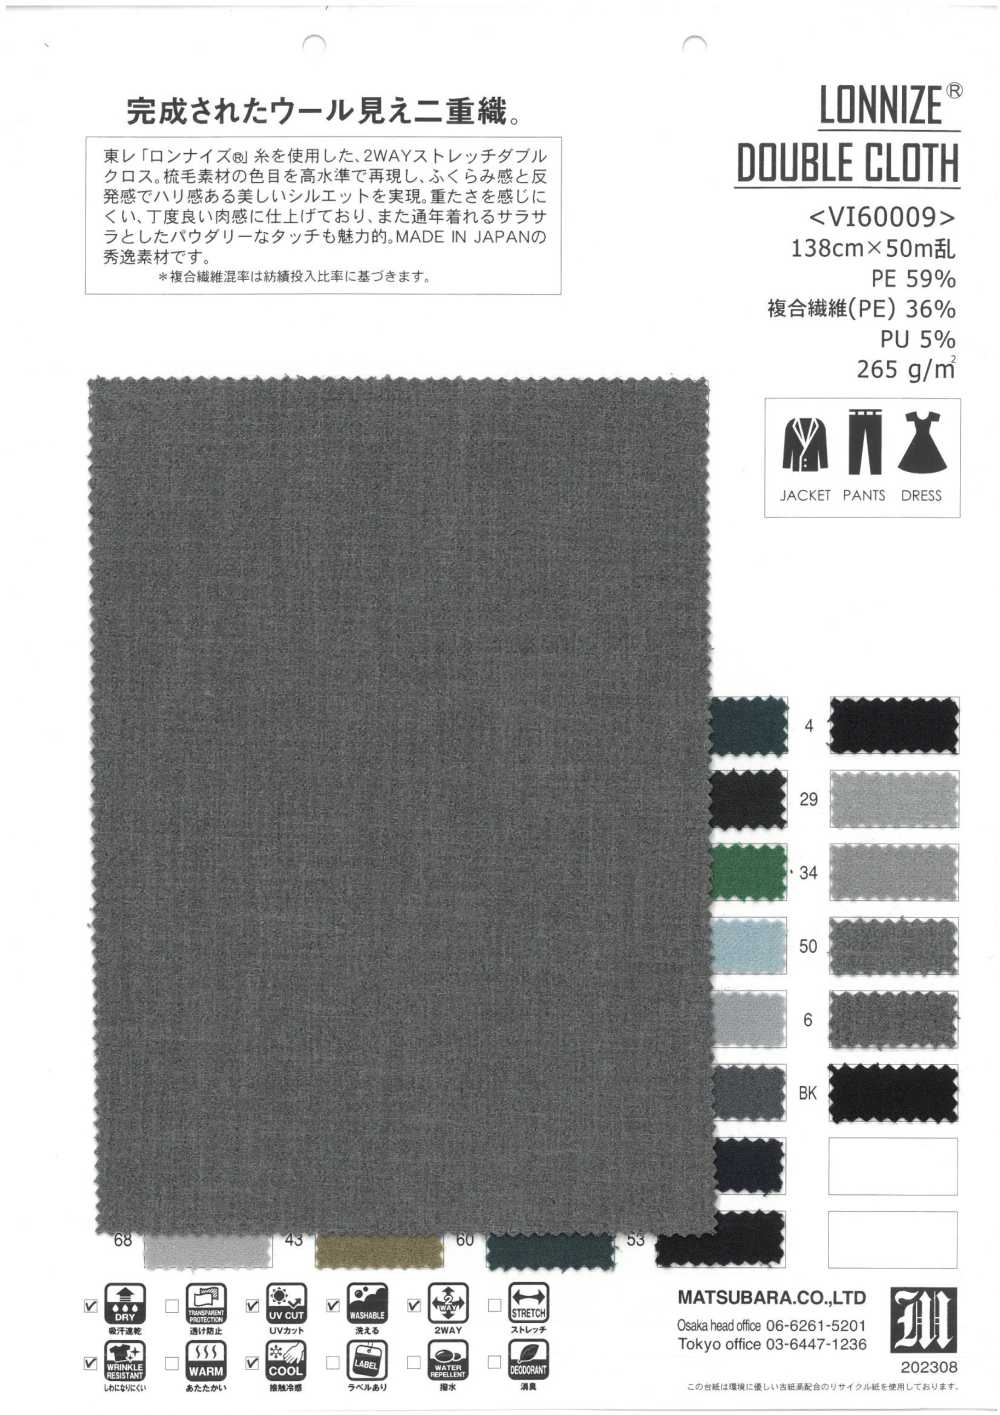 VI60009 LONNIZE® DOPPELTUCH[Textilgewebe] Matsubara